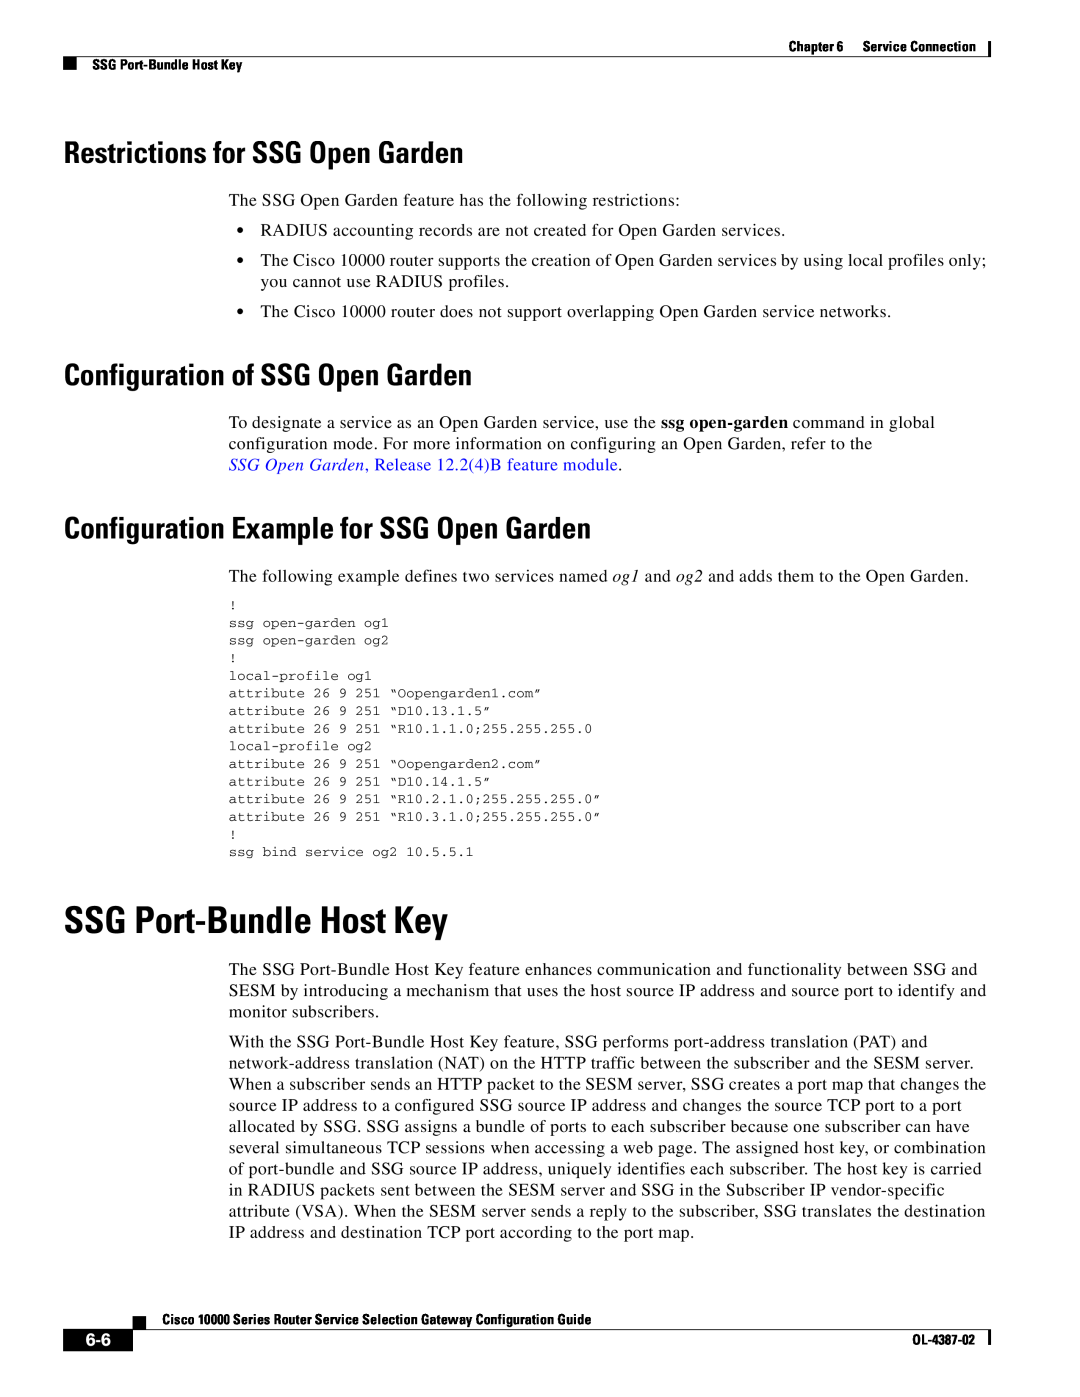 Cisco Systems OL-4387-02 SSG Port-Bundle Host Key, Restrictions for SSG Open Garden, Configuration of SSG Open Garden 